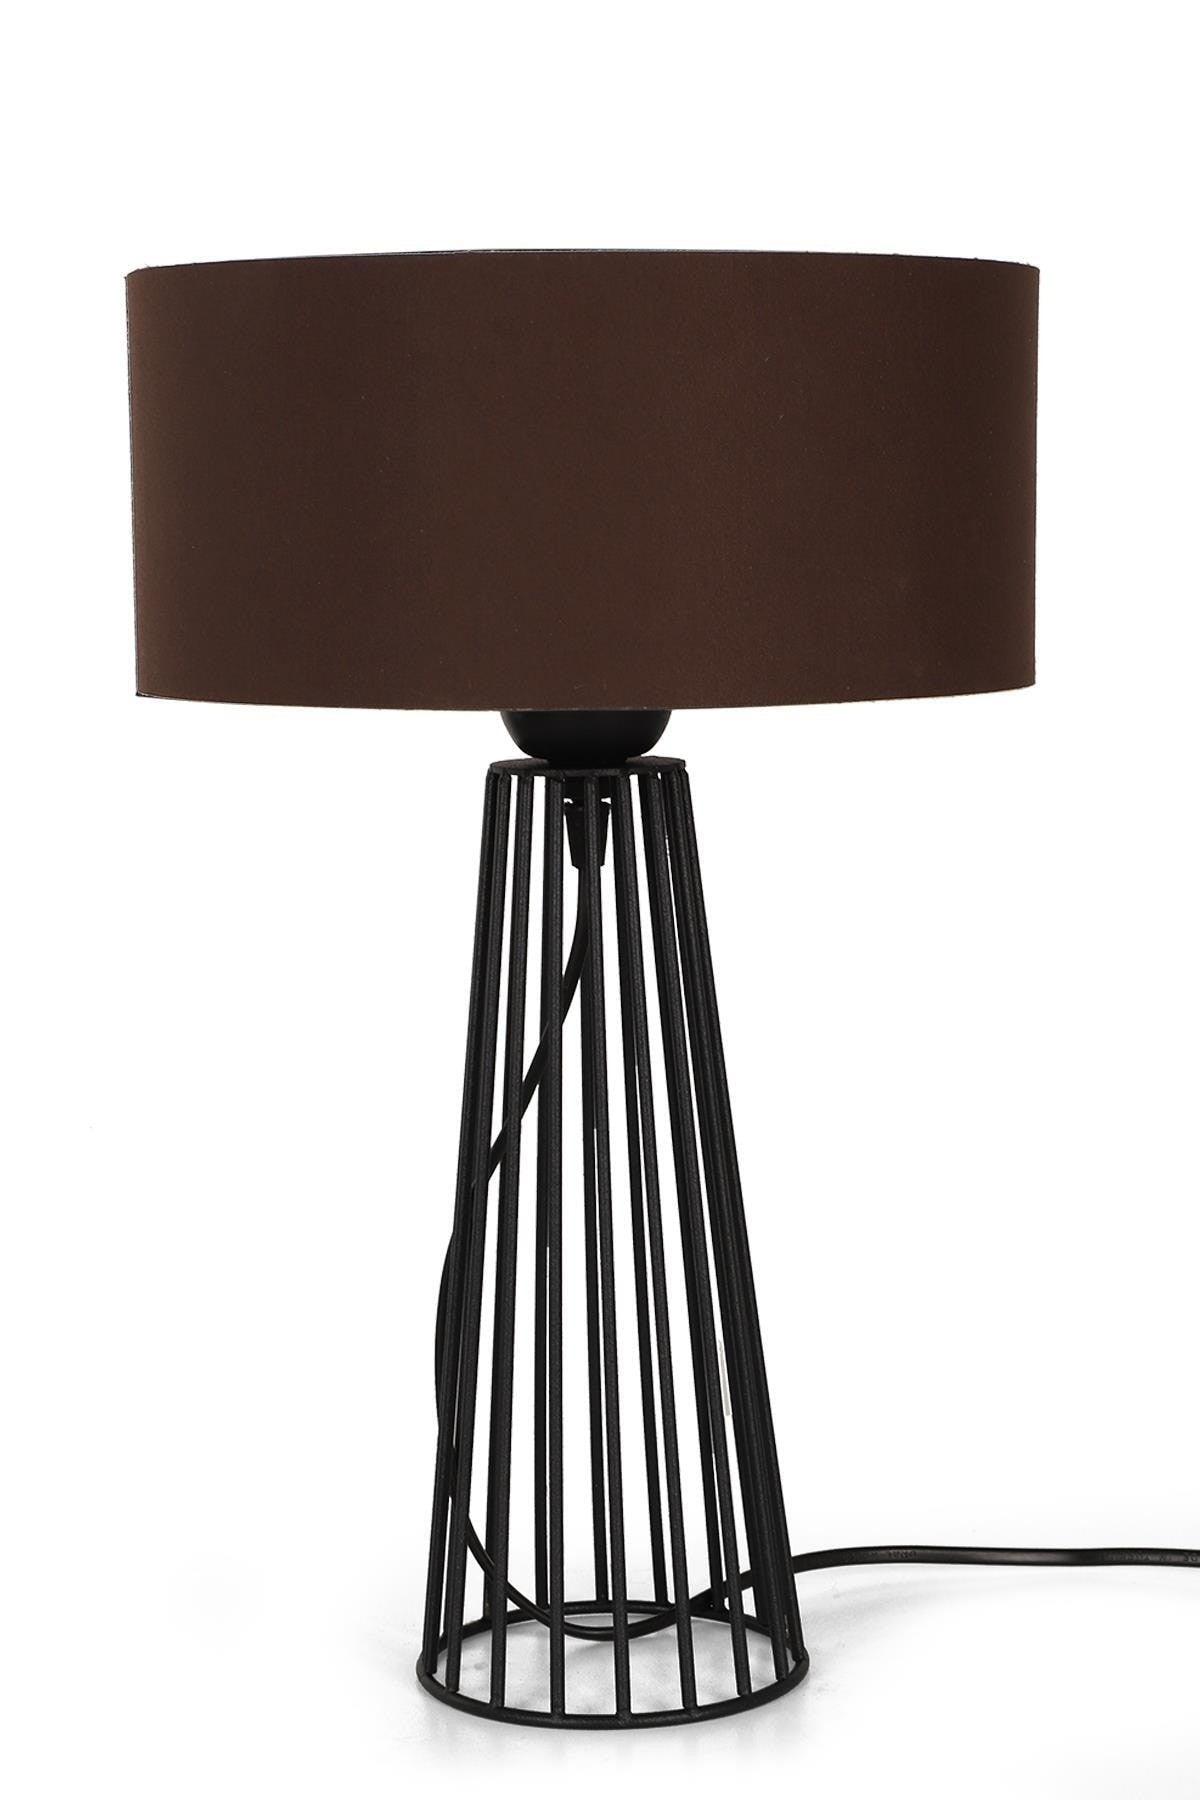 Philippine Table Lamp Black Brown Hat - Swordslife